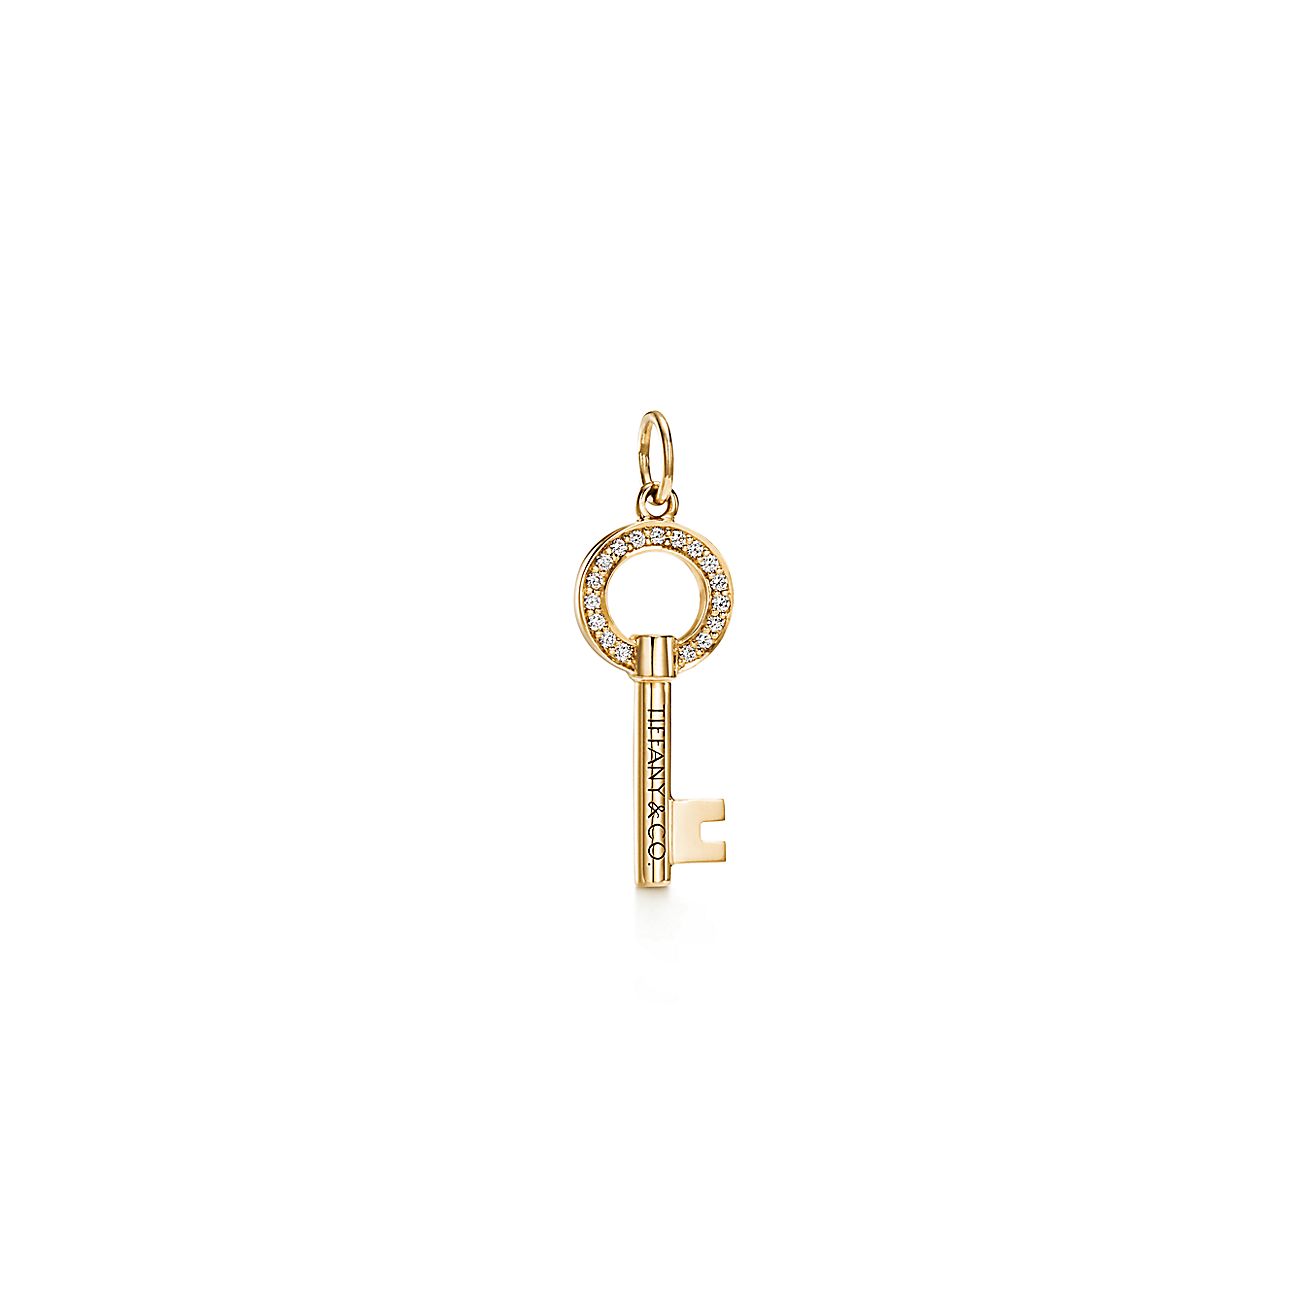 Tiffany Keys modern keys open round key pendant in 18k gold with